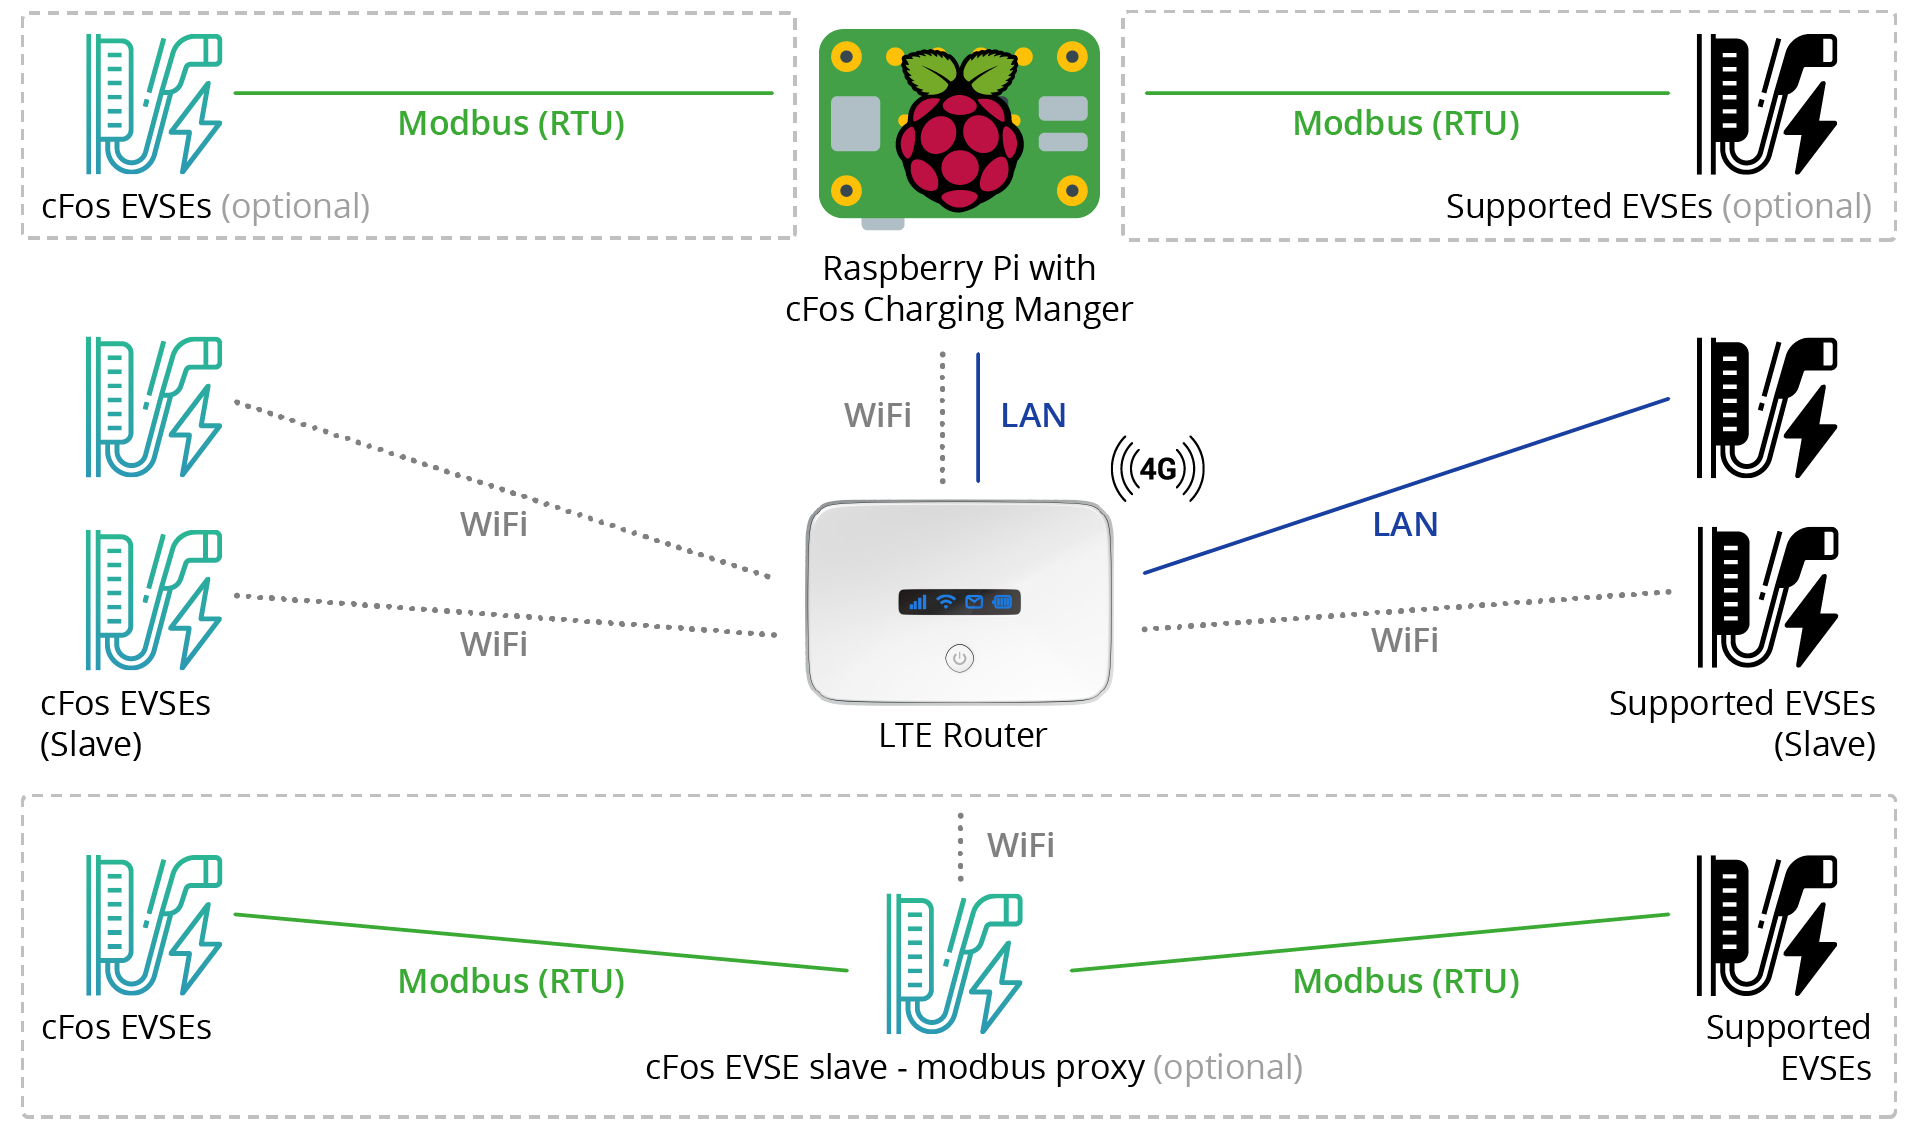 Exemplu grafic de configurare cu router LTE